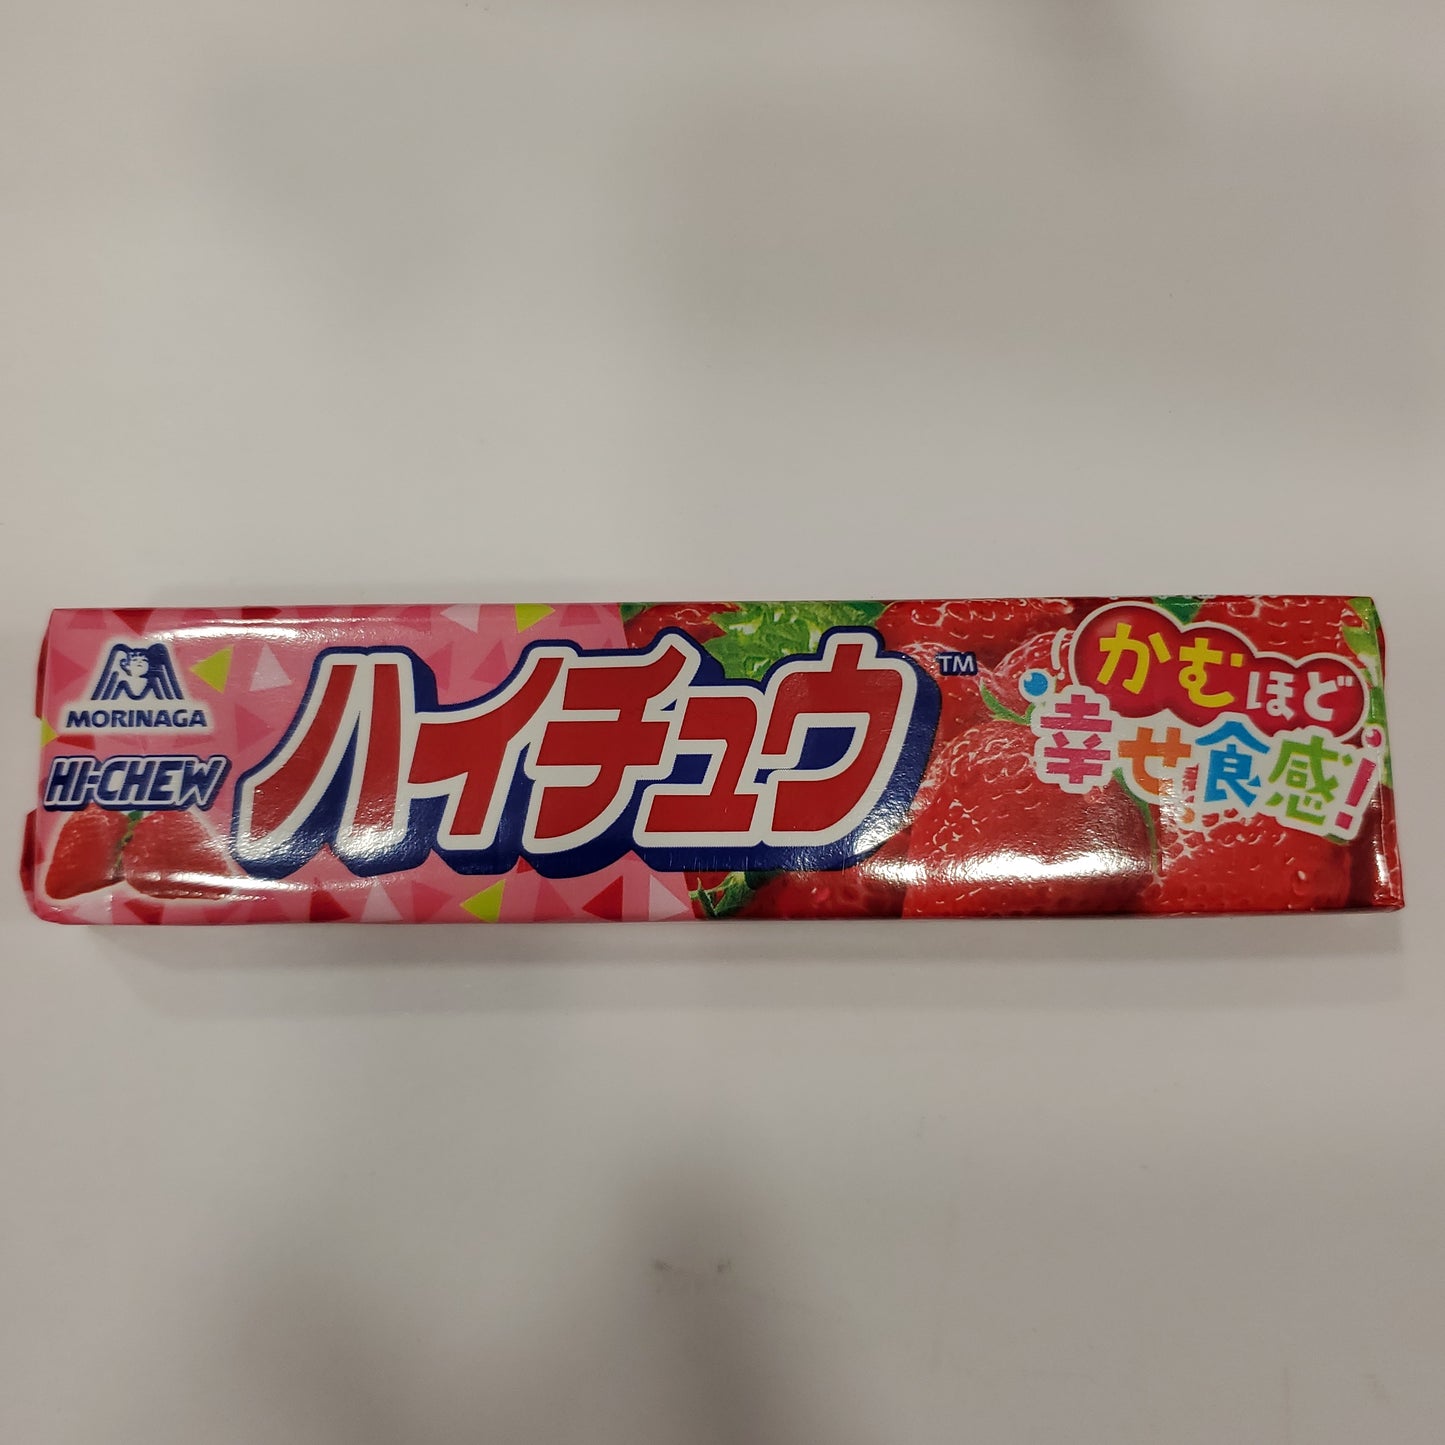 Morinaga Hi-Chew Candy (Strawberry) 55.2g